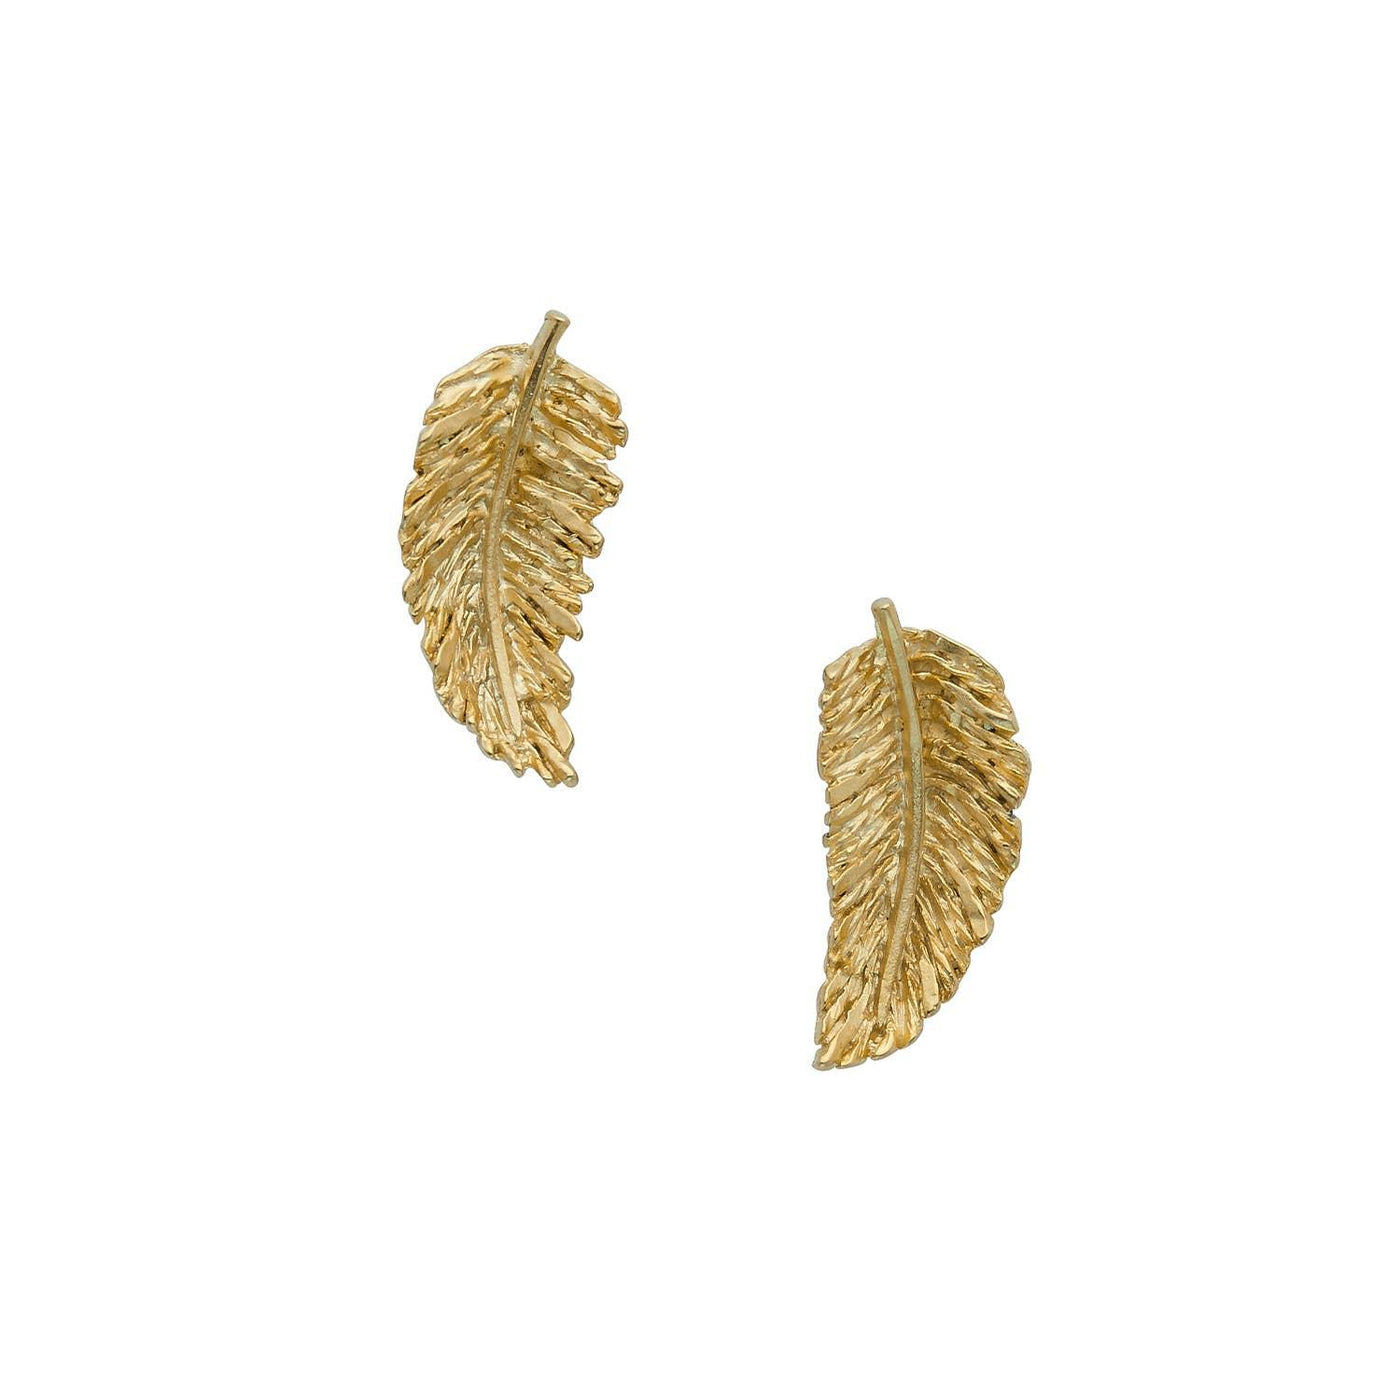 Textured gold leaf stud earrings